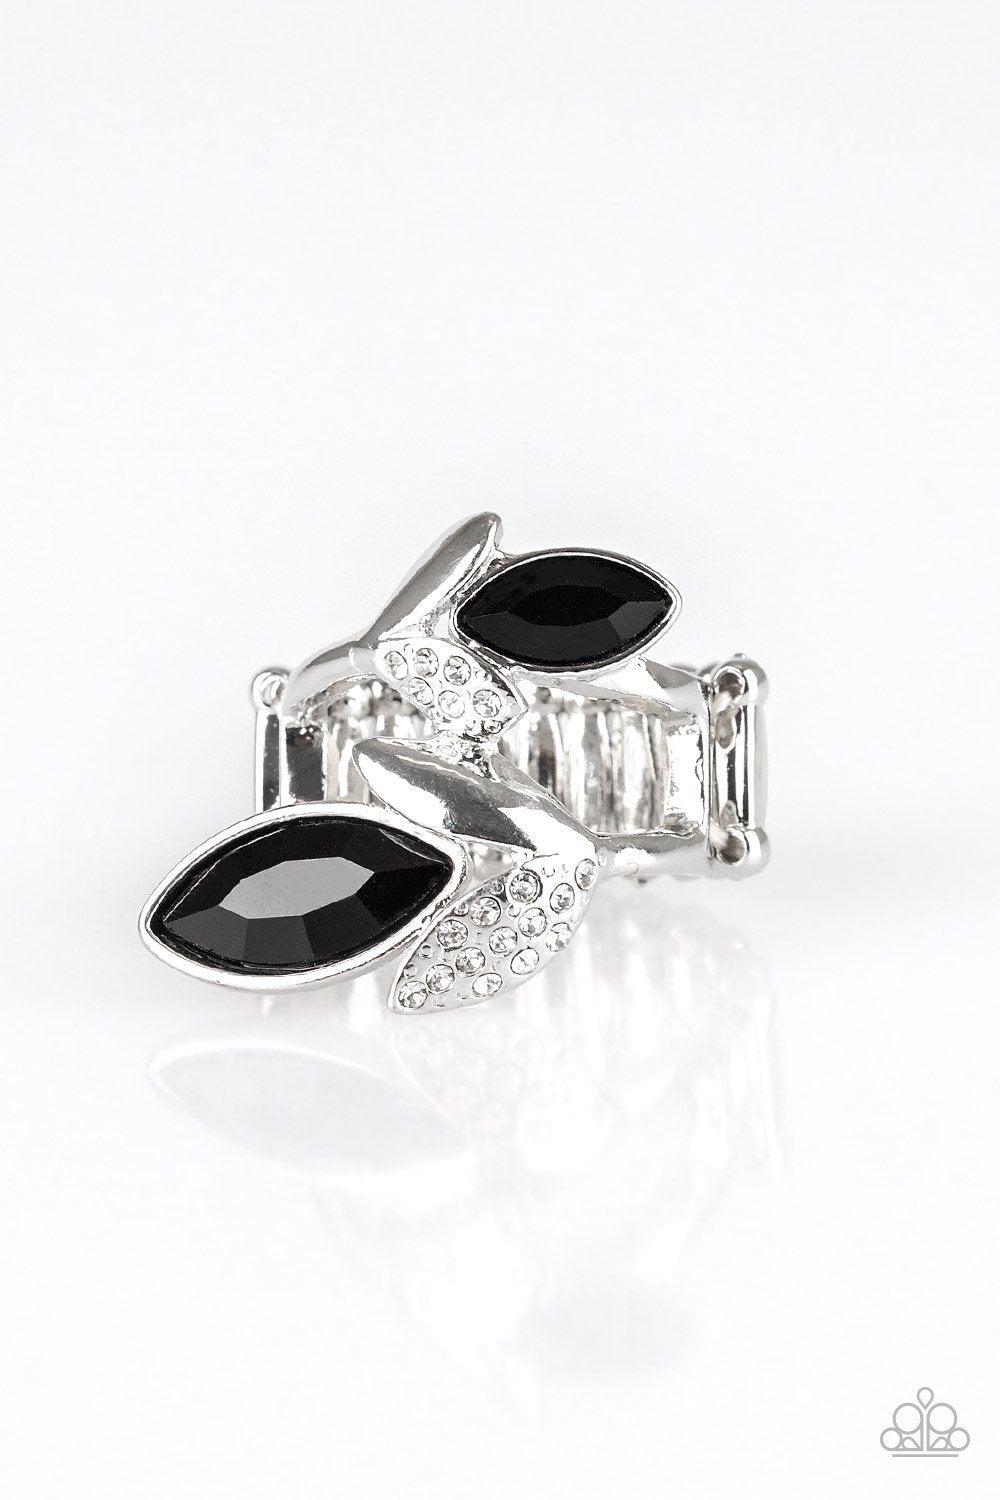 Flawless Foliage Black Rhinestone Ring - Paparazzi Accessories-CarasShop.com - $5 Jewelry by Cara Jewels